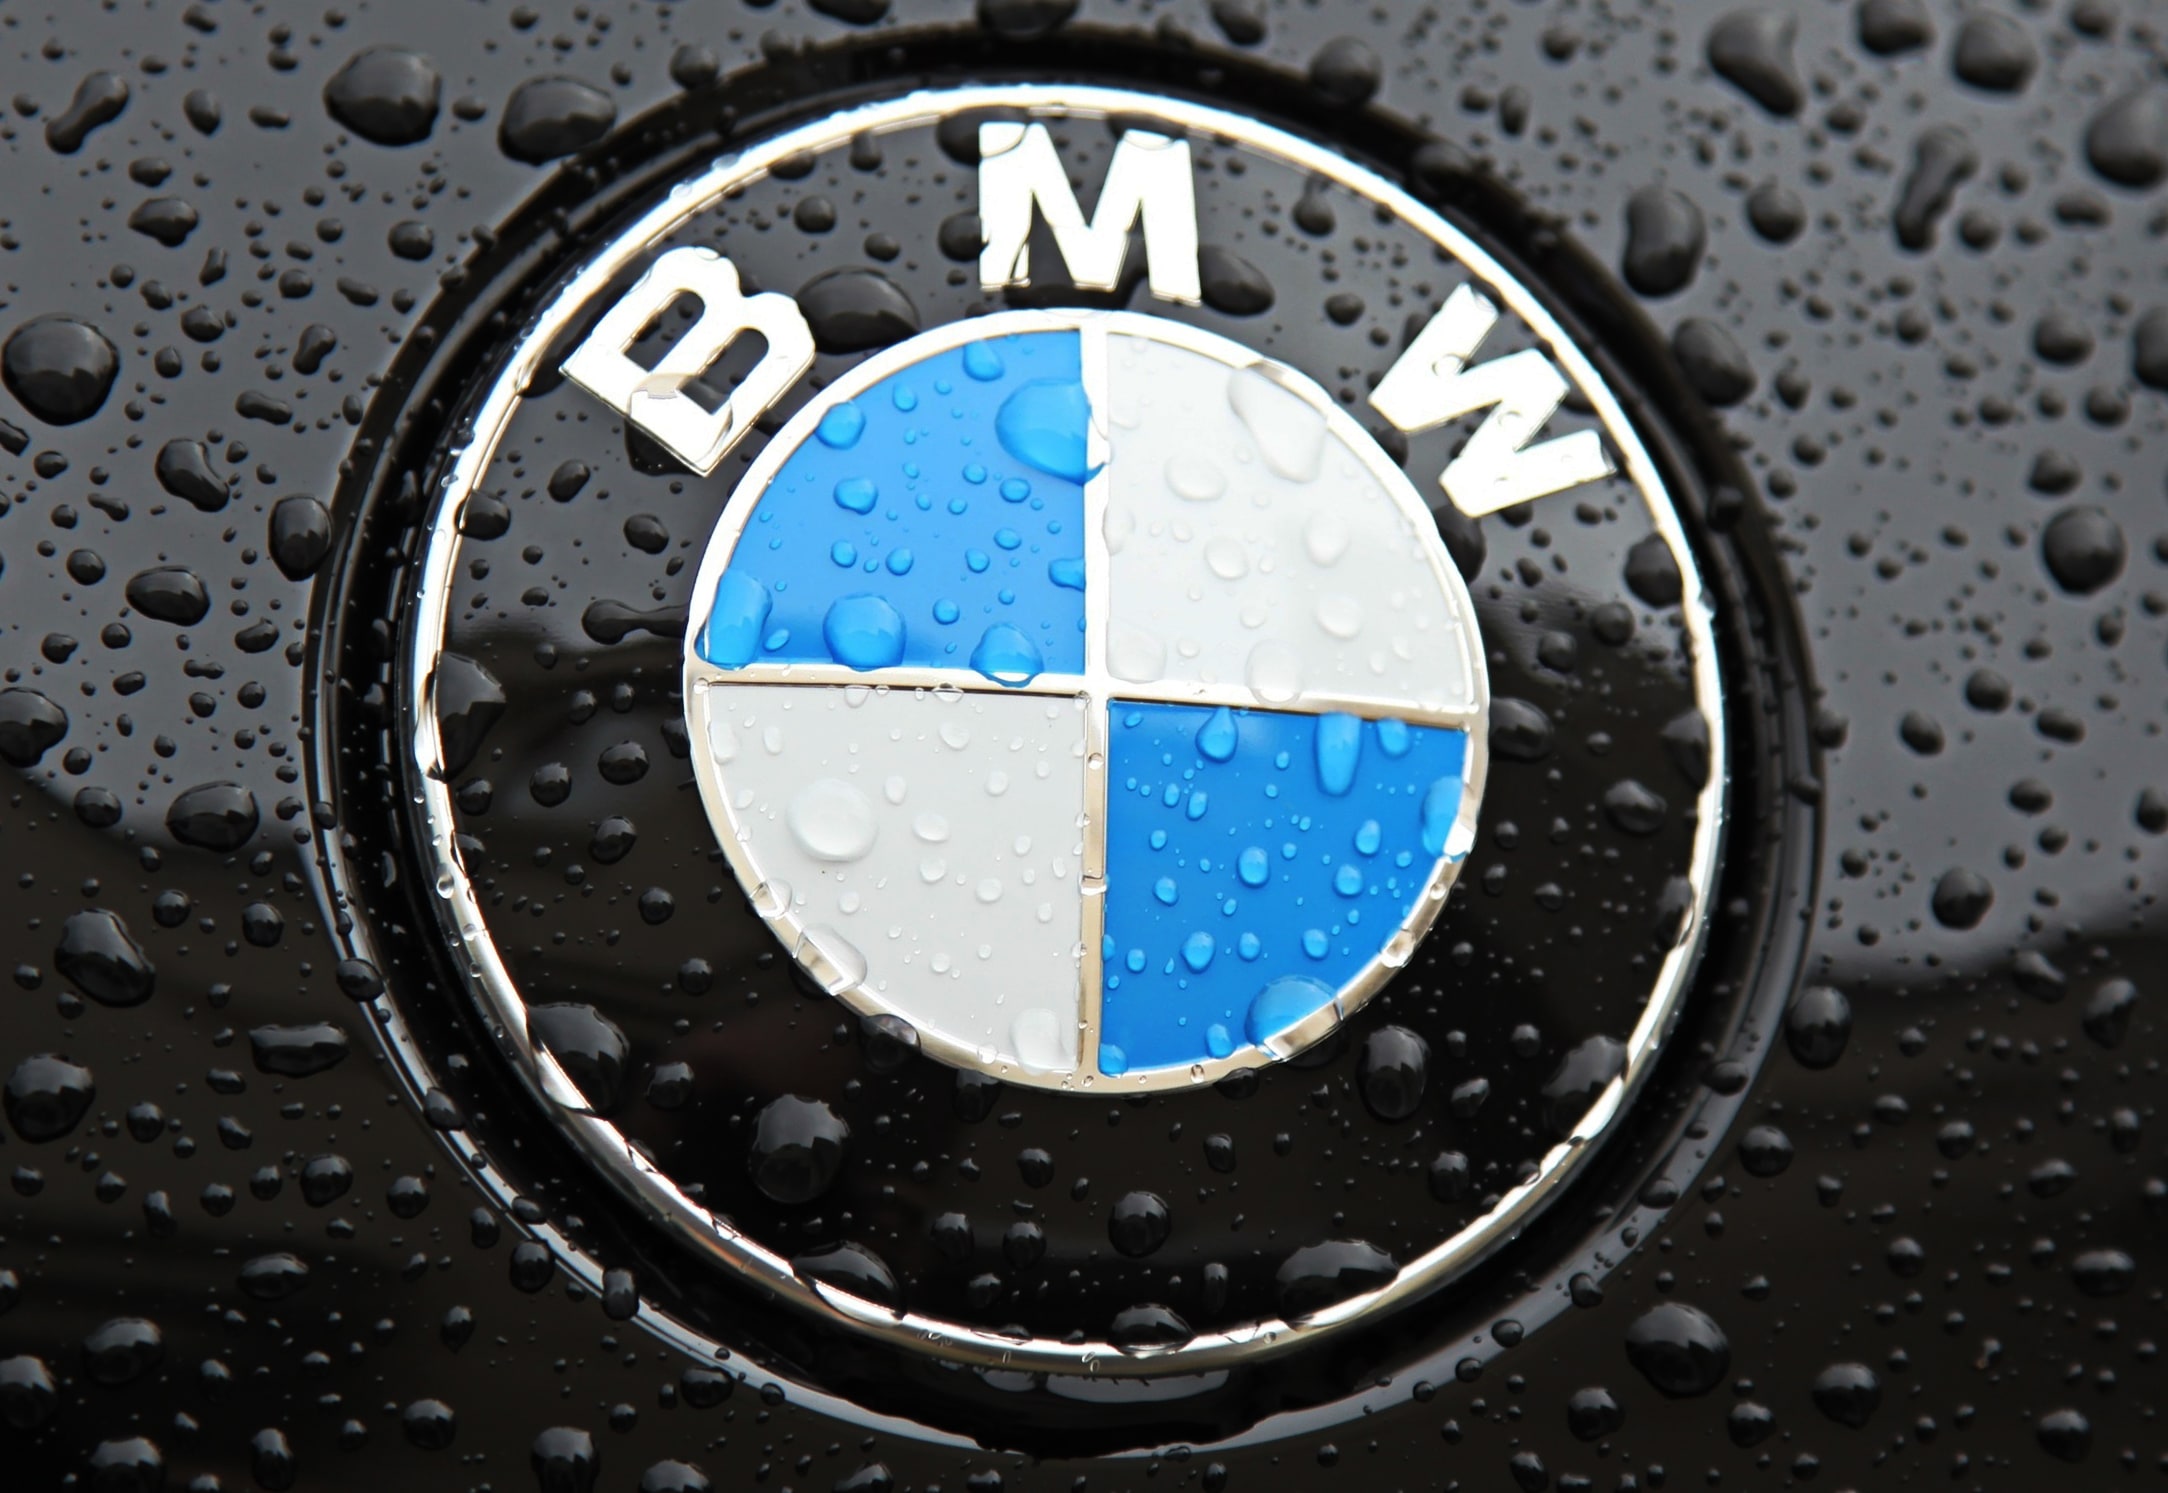 BMW logo Wallpapers